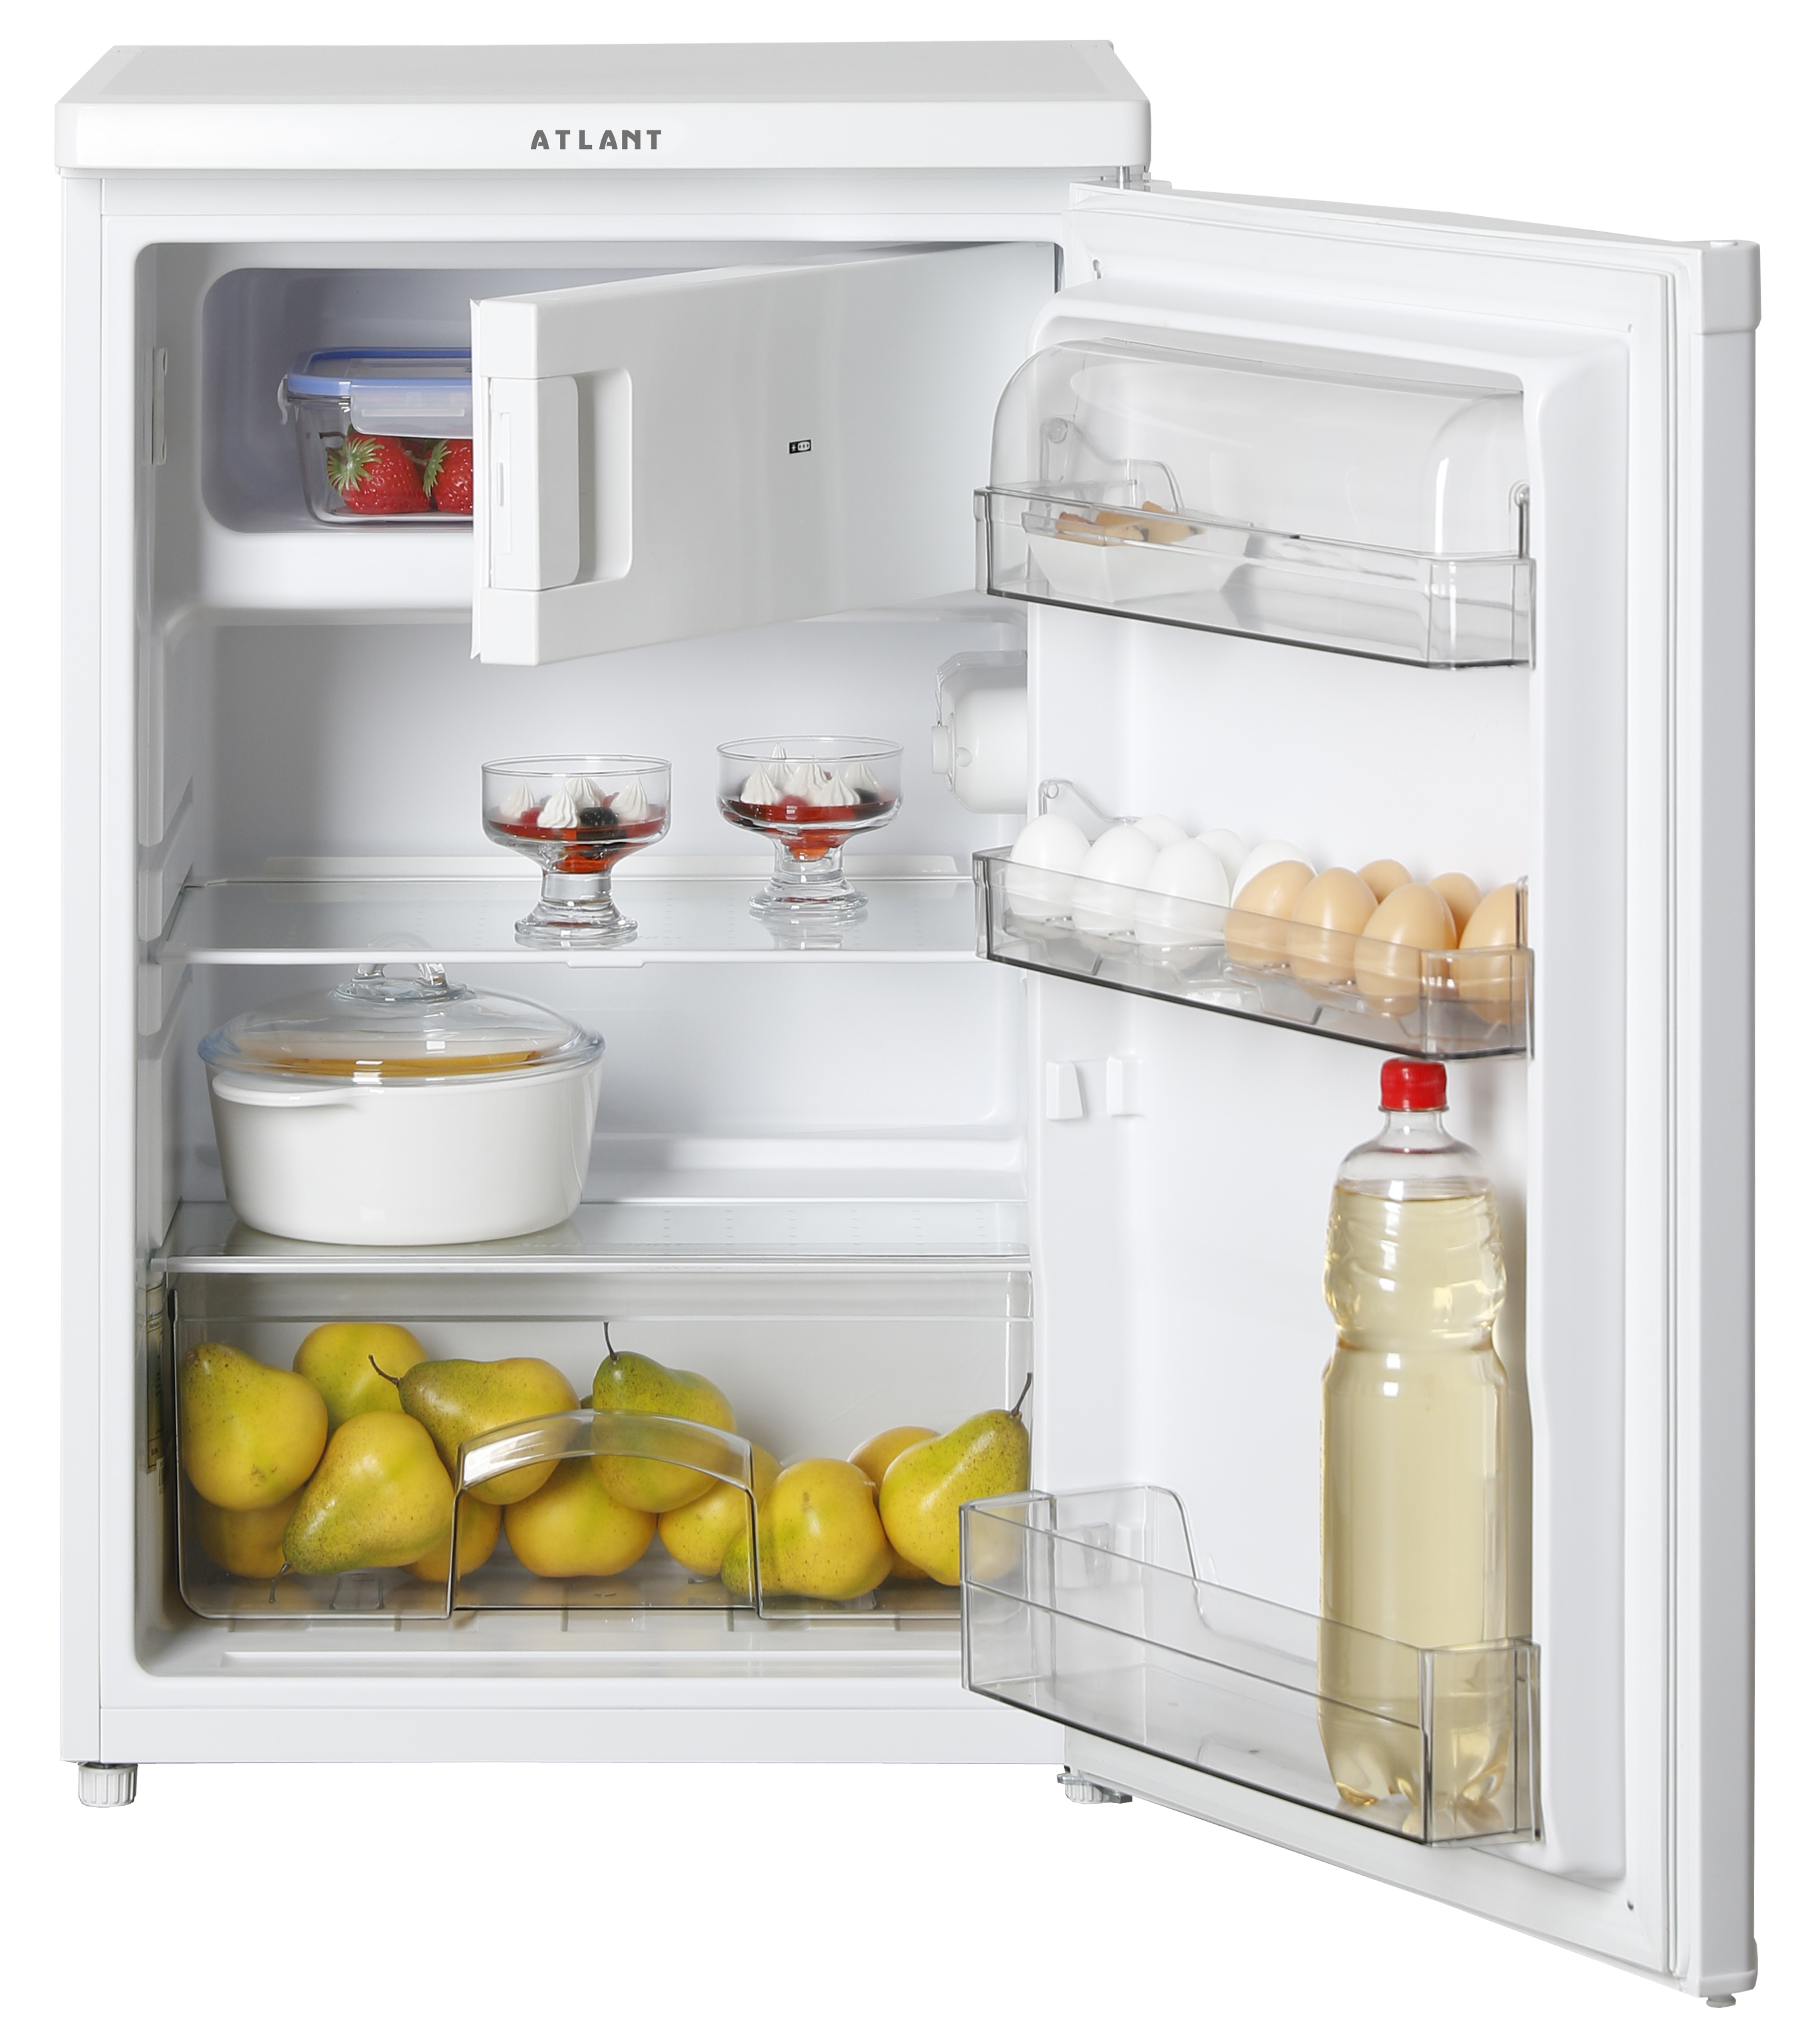 Атлант без морозилки. Холодильник Атлант 2401-100. Холодильник Атлант , однокамерный, белый х 2401-100. Однокамерный холодильник ATLANT Х 2401-100. Атлант однокамерный холодильник с морозилкой.